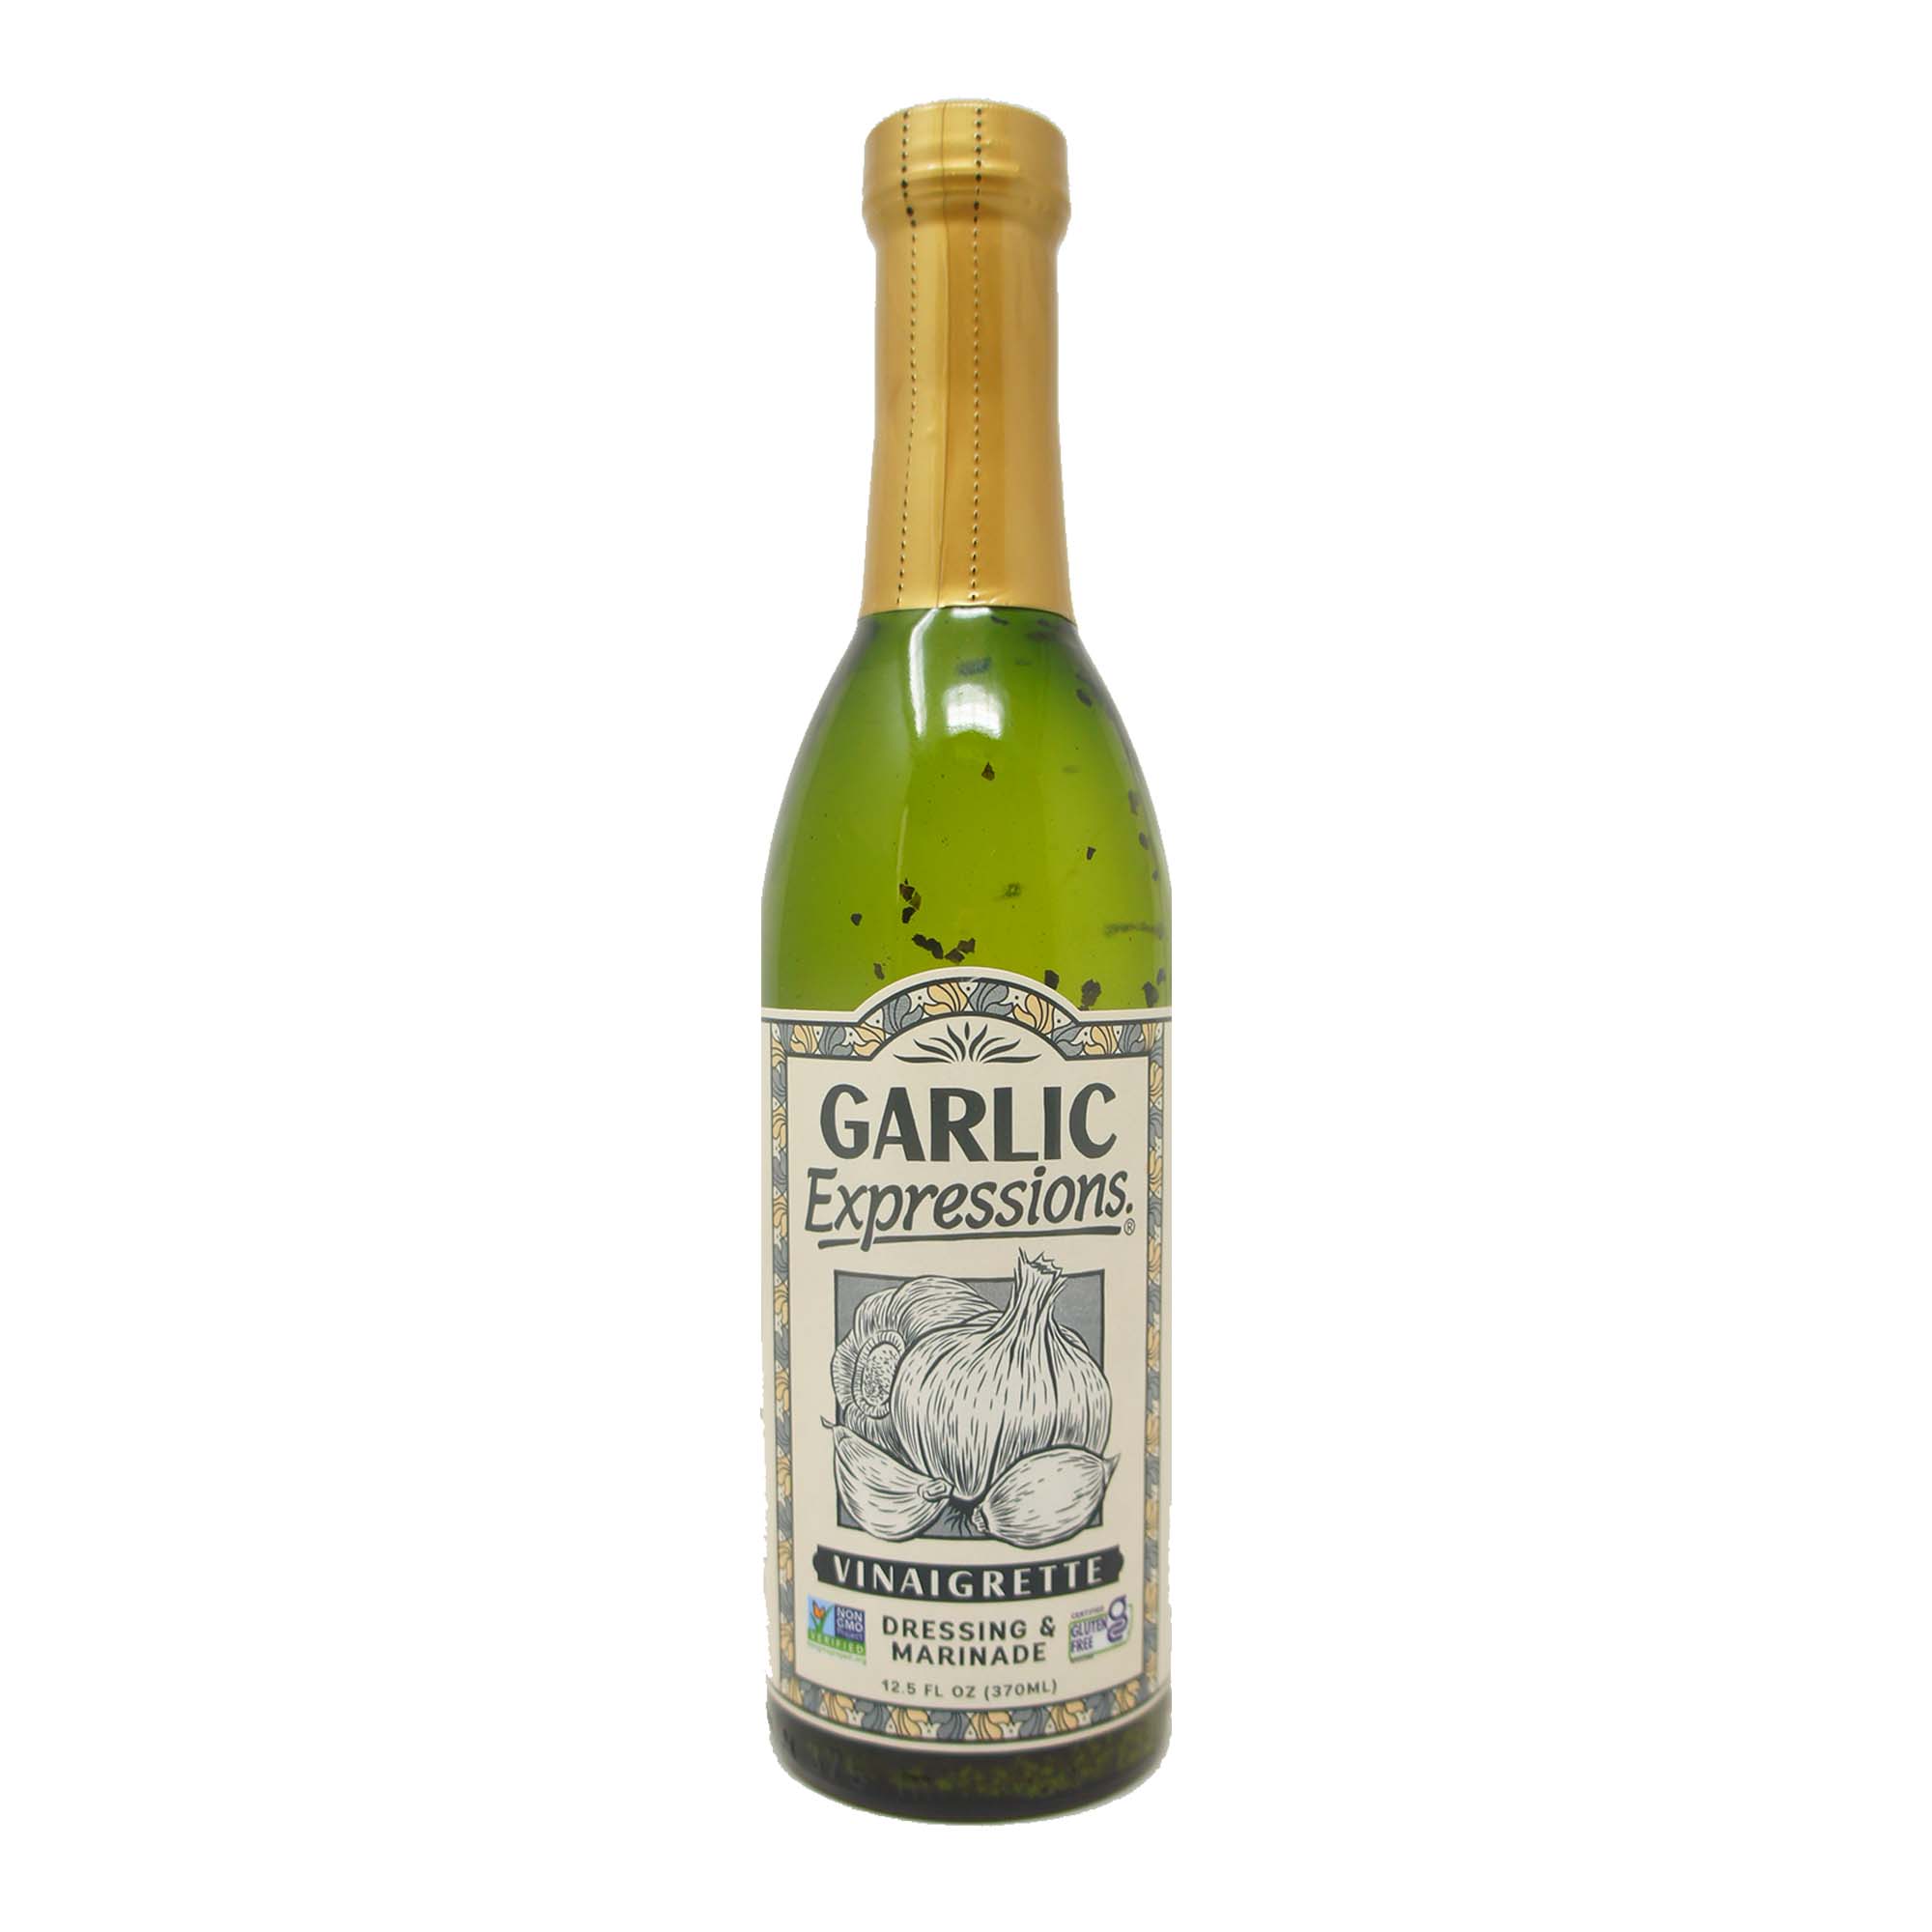 Garlic Expressions Vinaigrette, Salad Dressing & Marinade